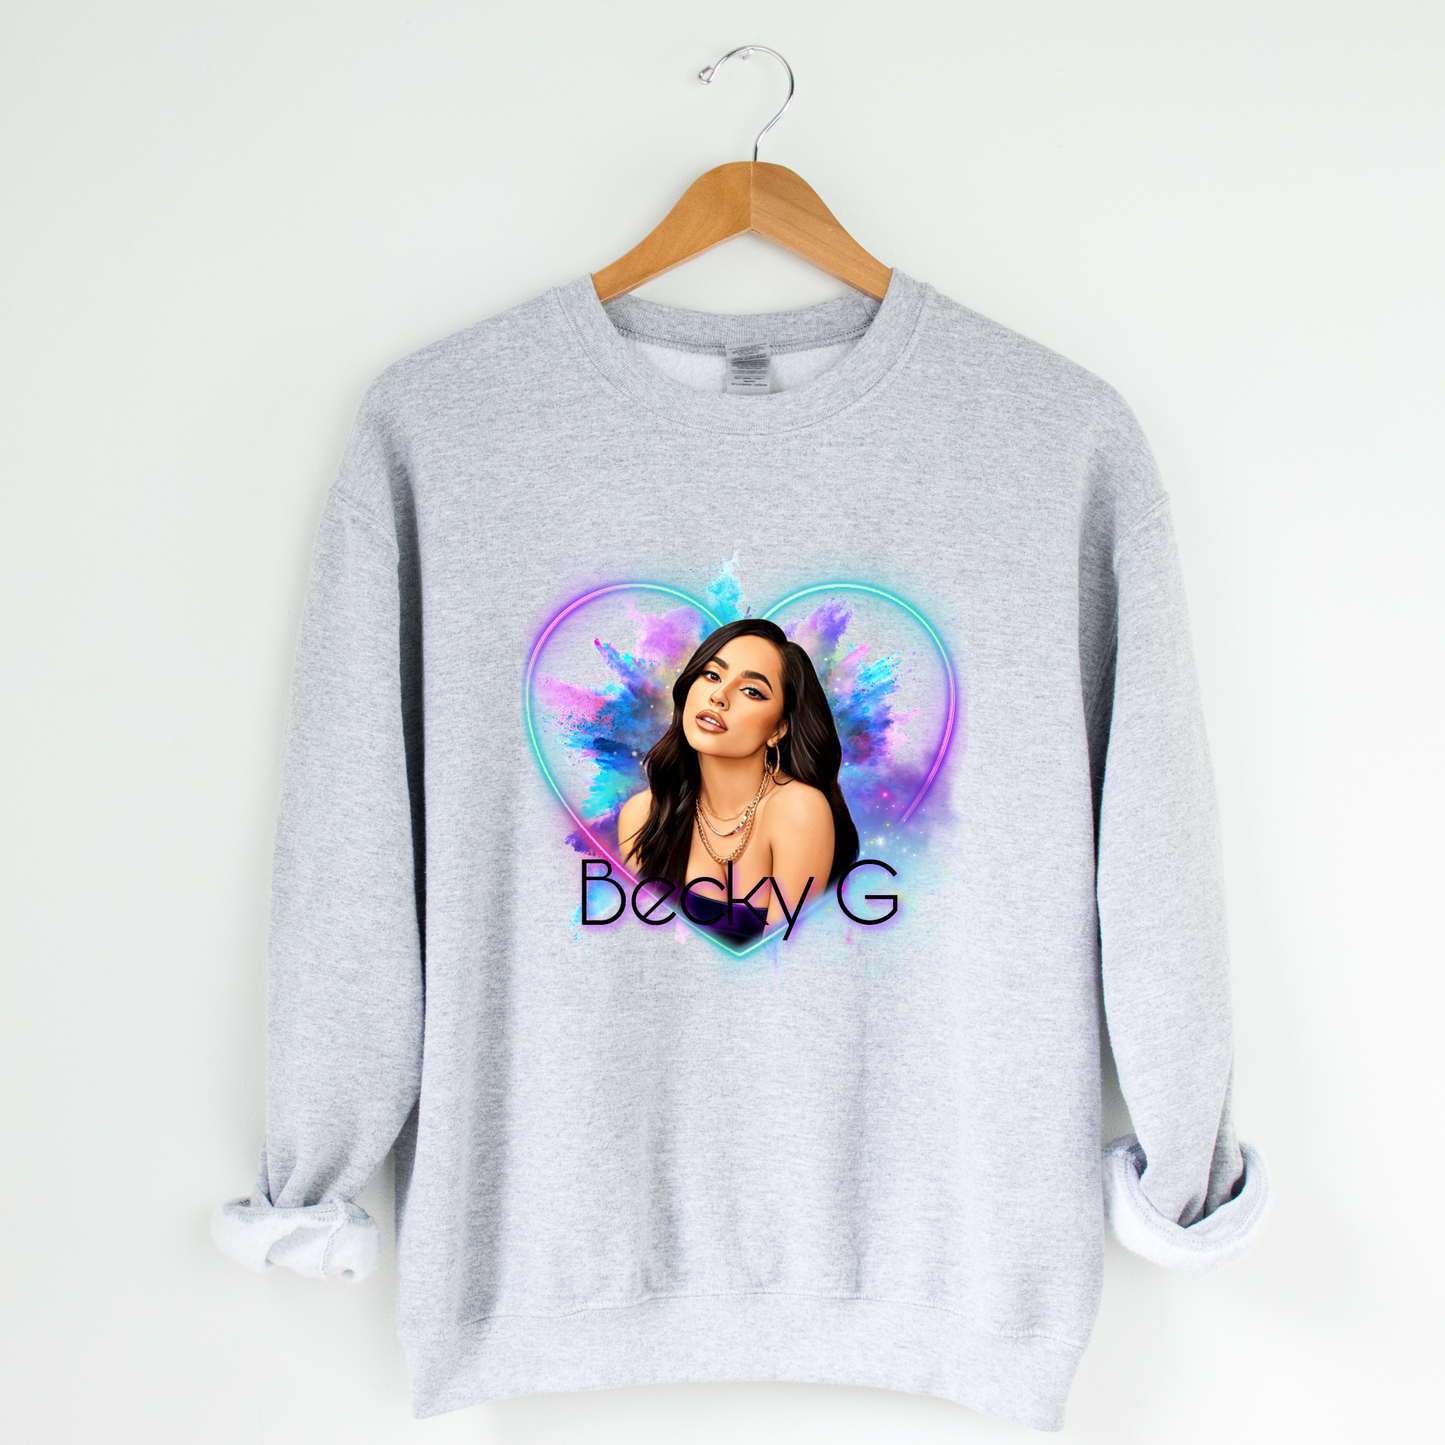 Becky G Crew Neck Graphic Sweater